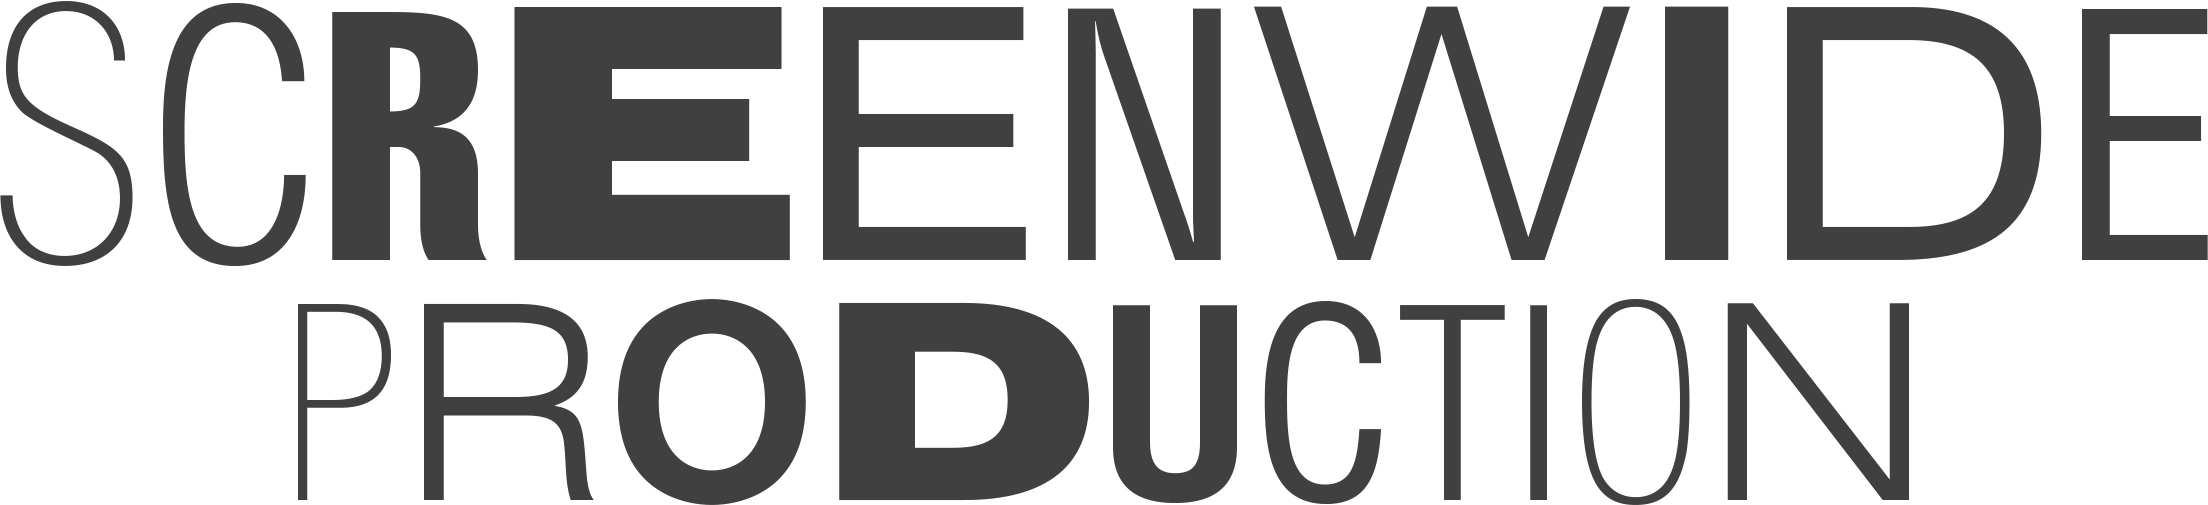 screenwide production logo